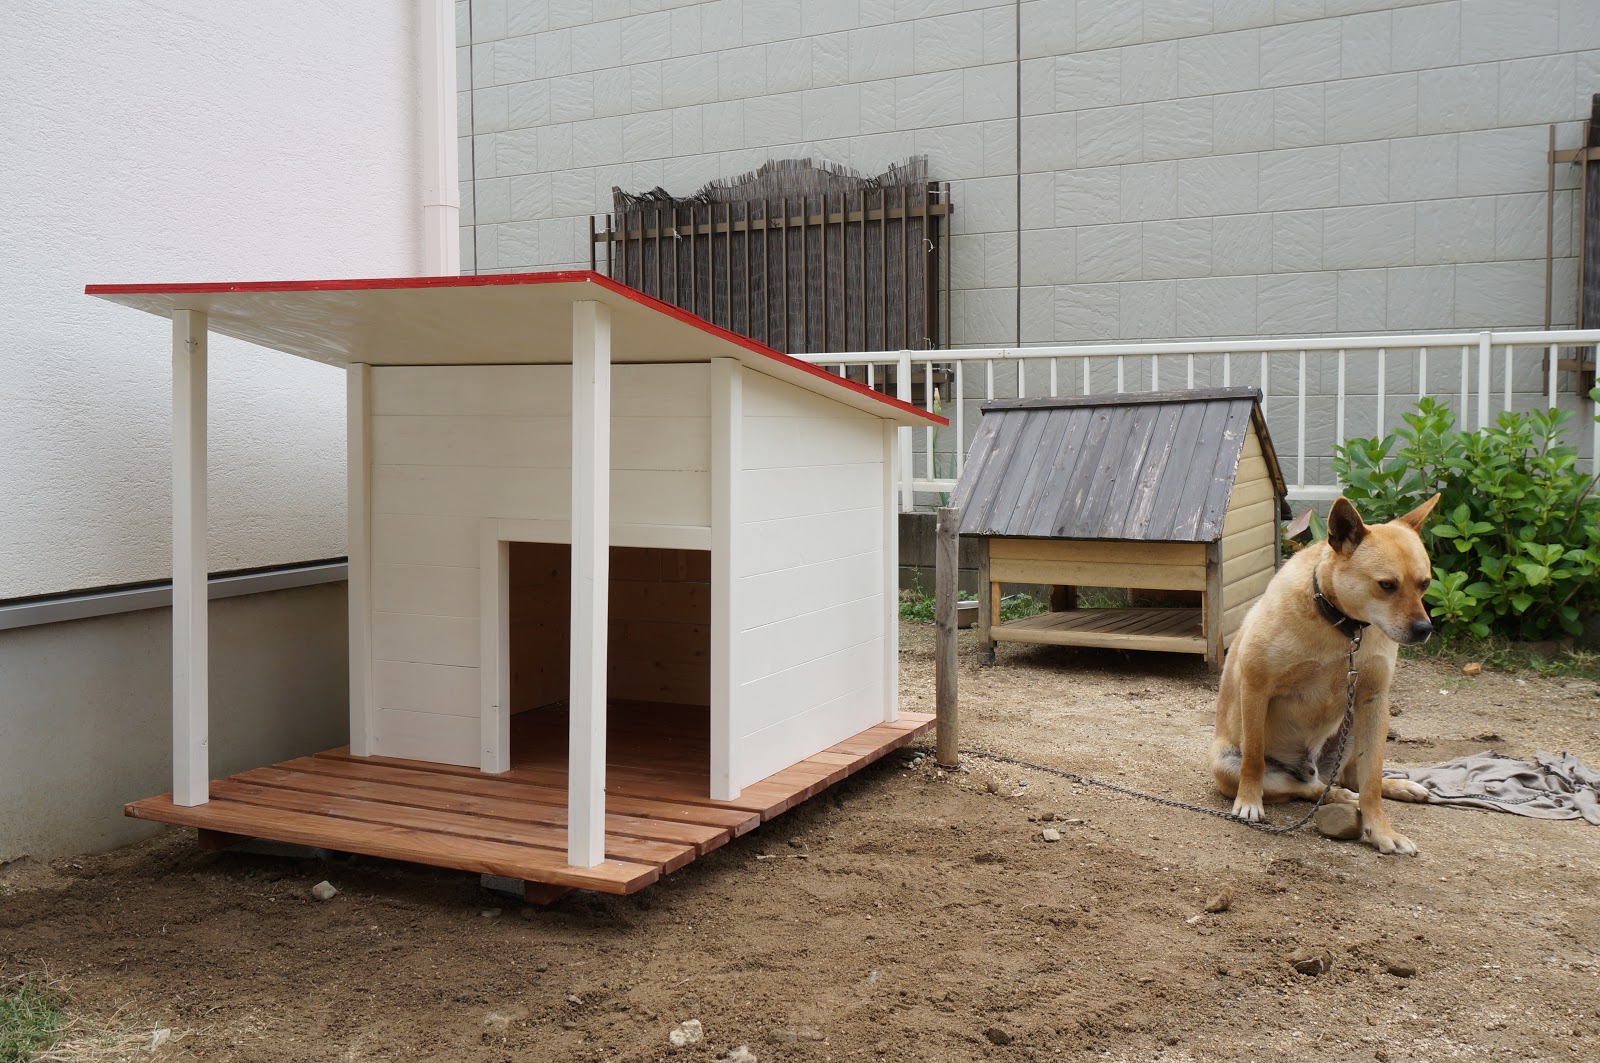 Something Good By Diy 手作りのステキな何か 新しい犬小屋公開 デザイン 設計 製作２ヶ月くらいかかっています